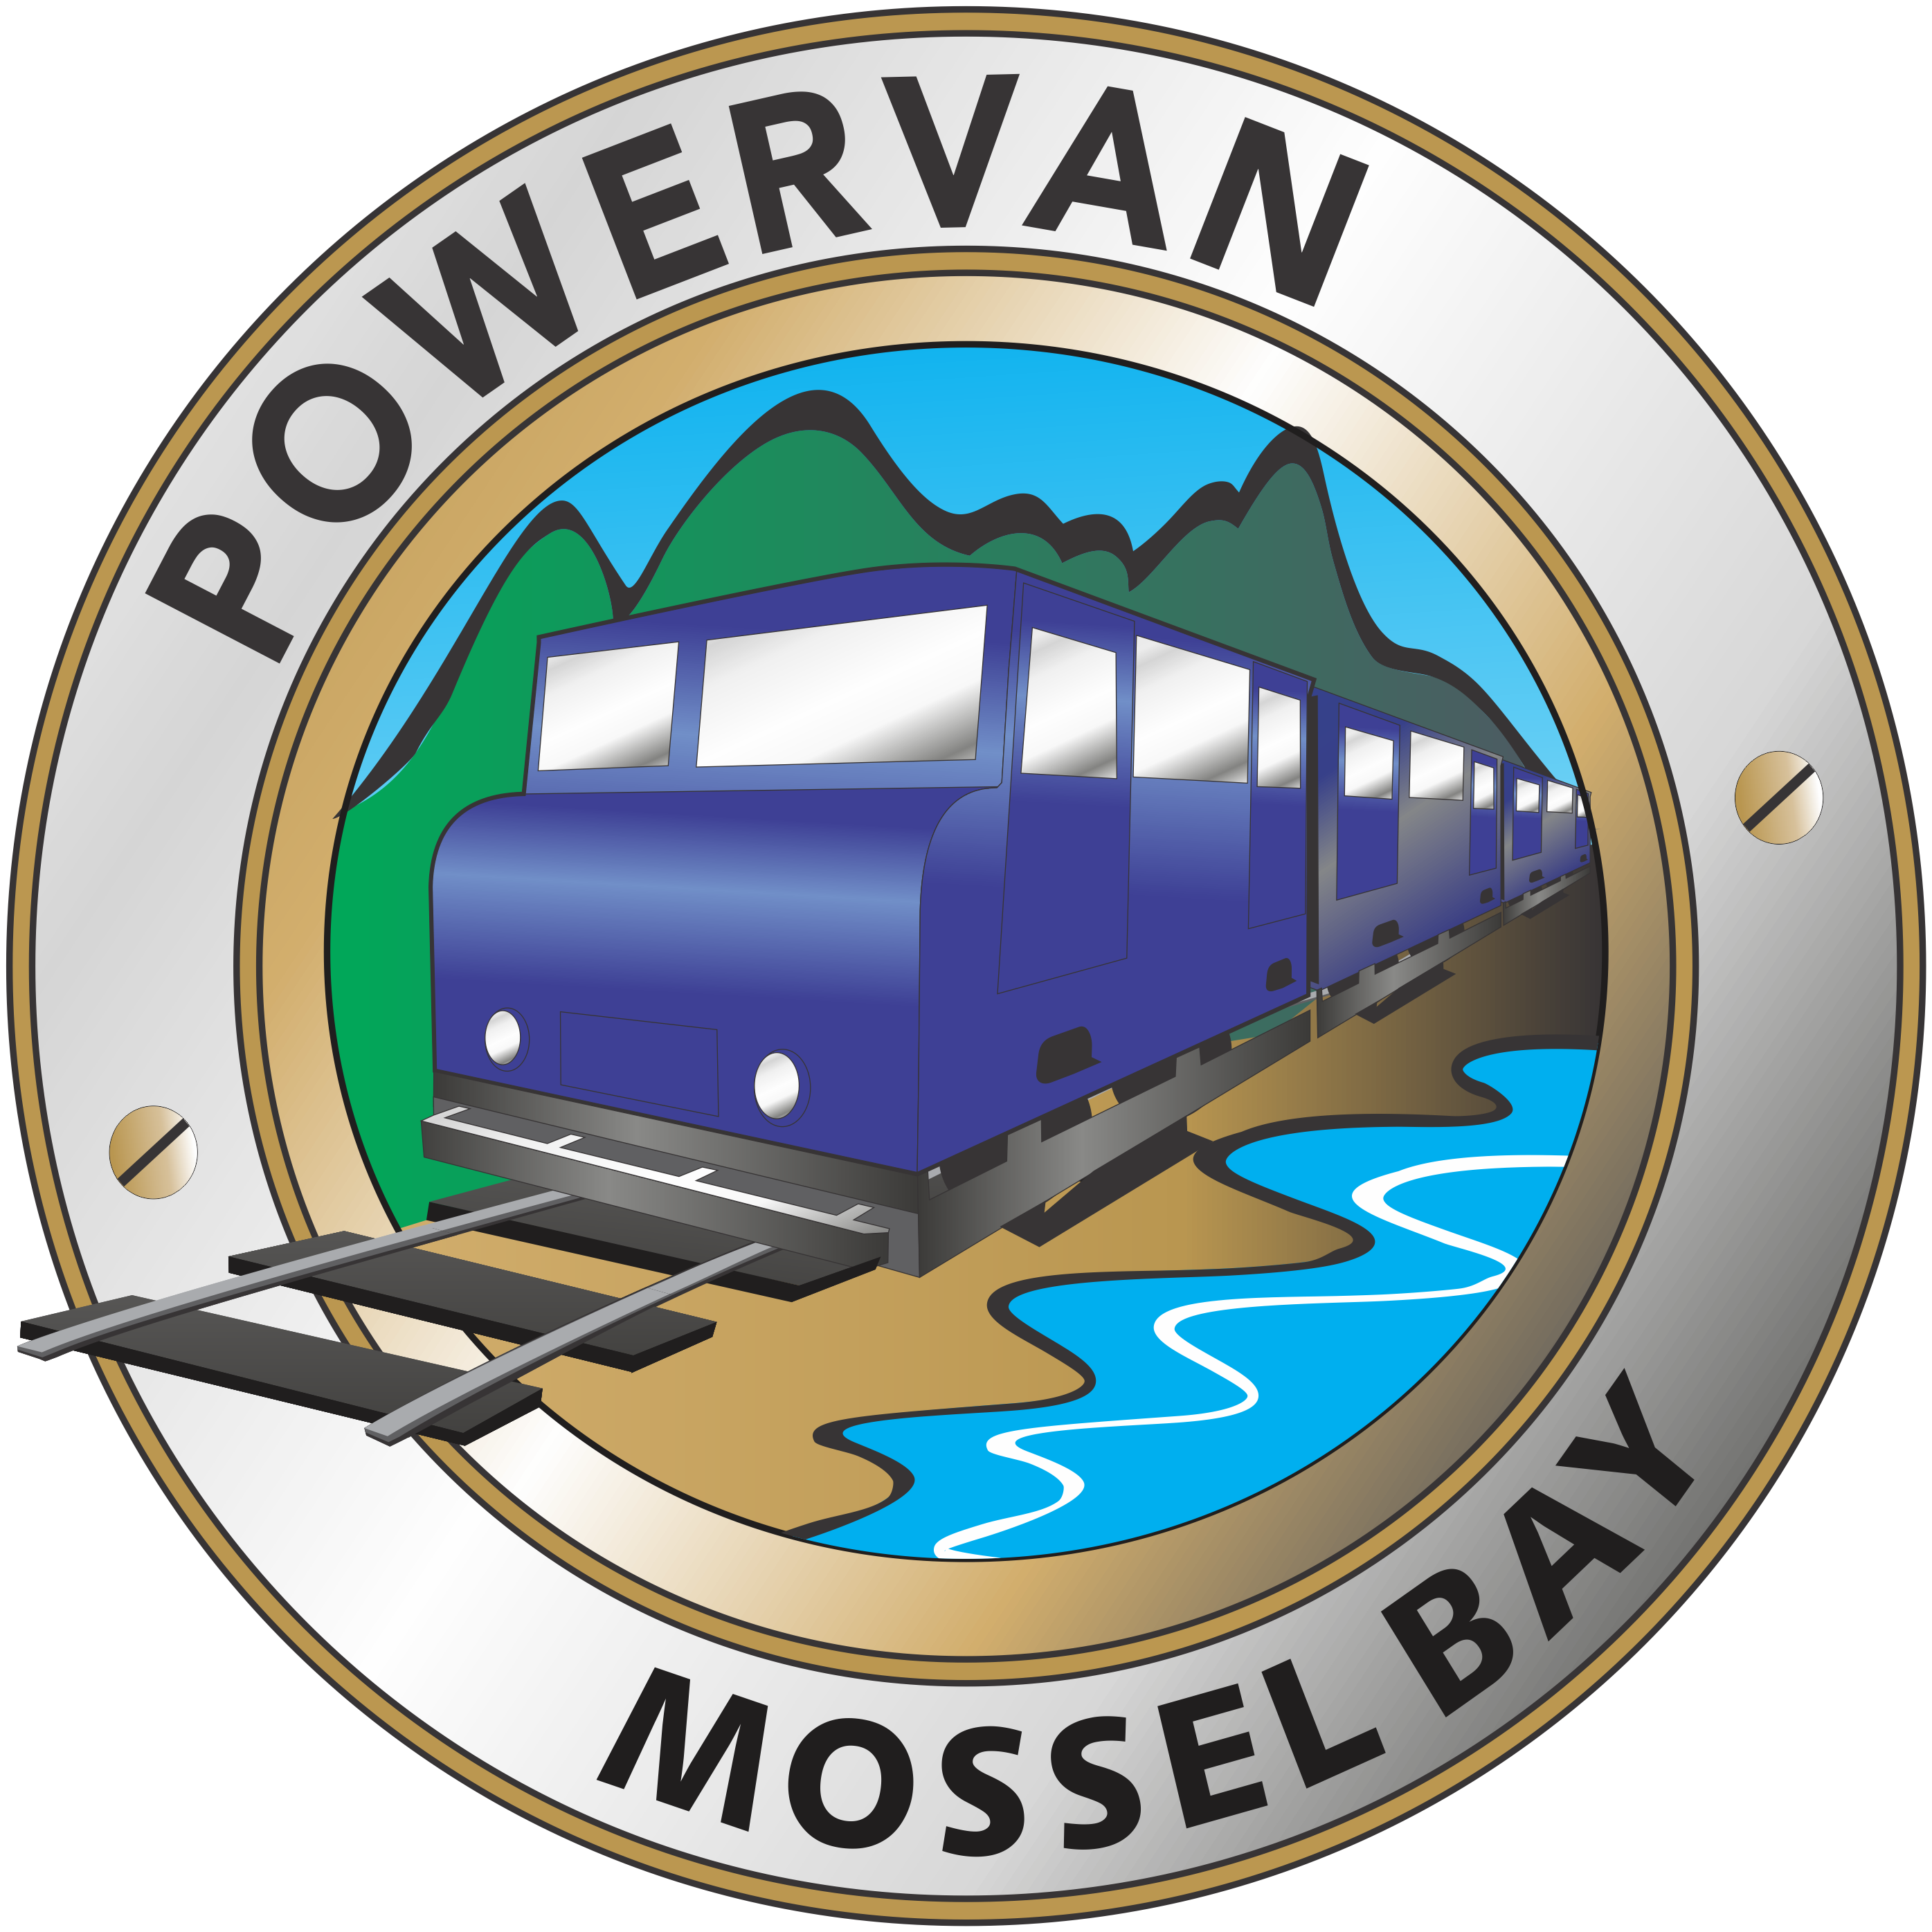 Powervan Mosselbay